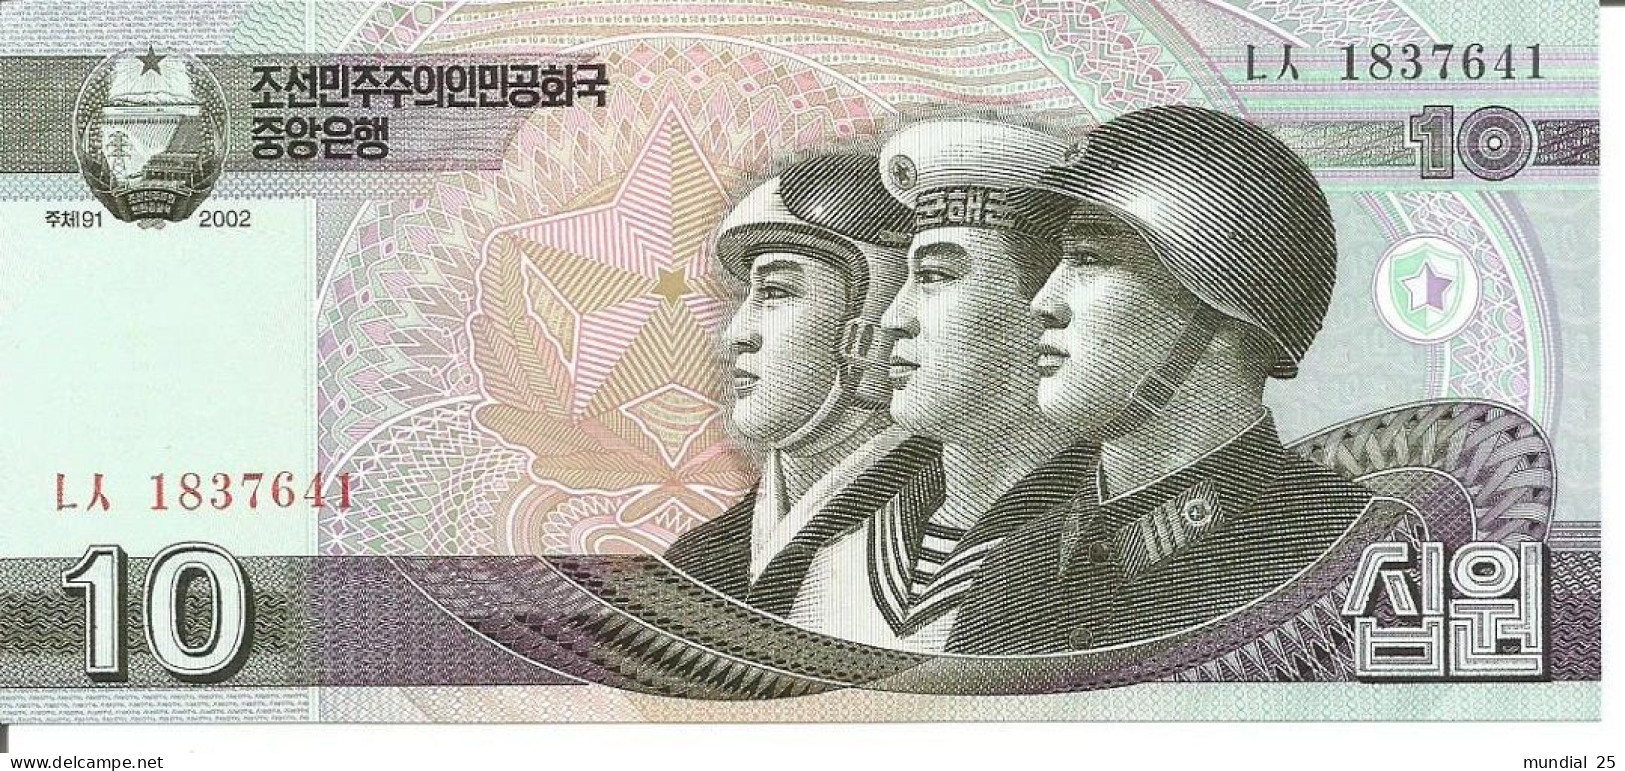 3 KOREA, NORTH NOTES 10 WON 2002 - Corée Du Nord